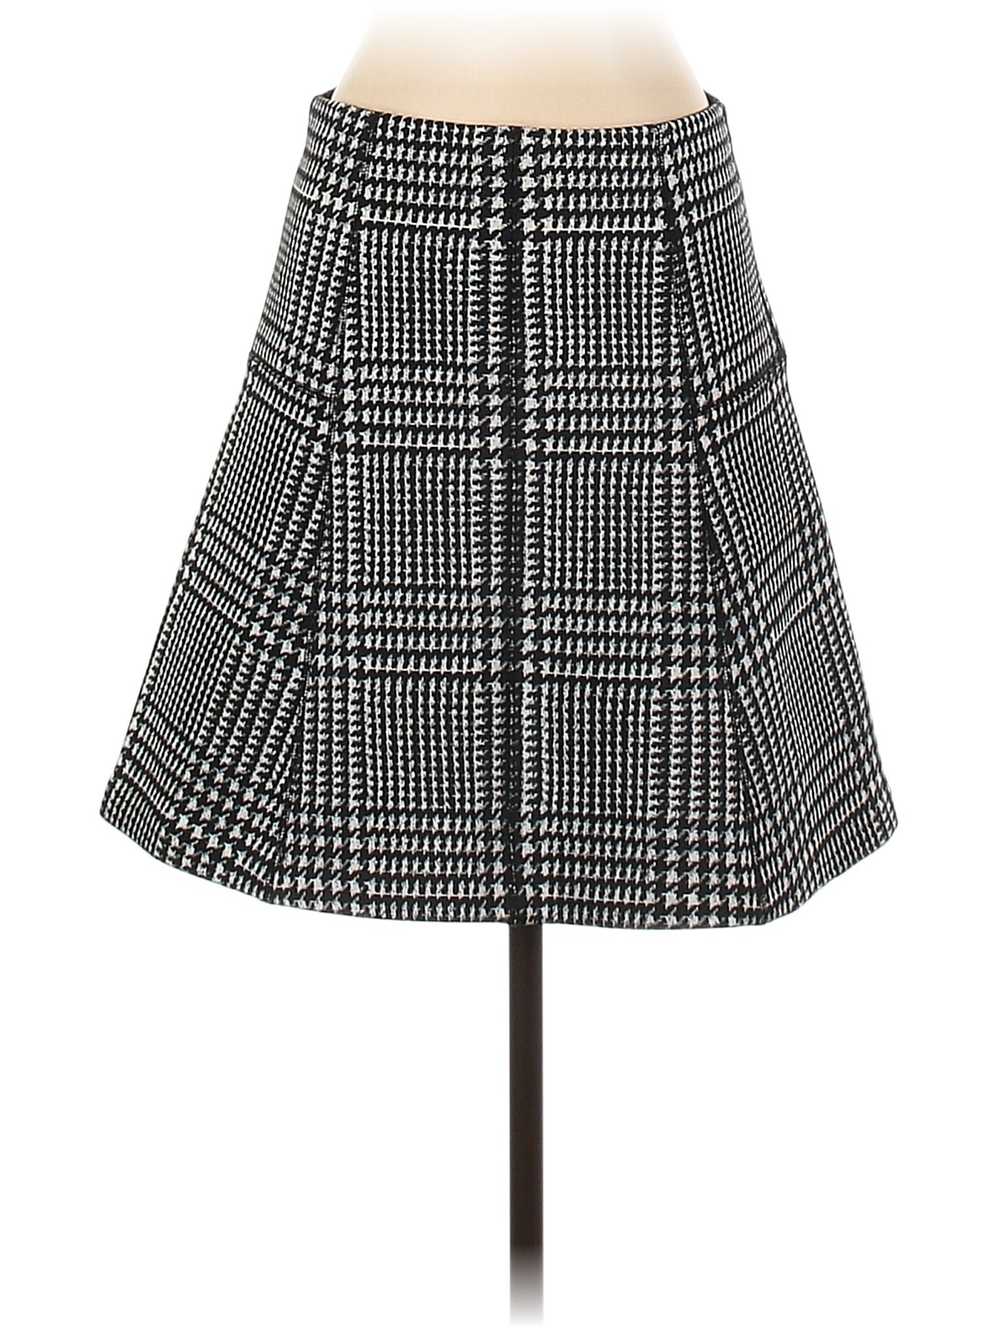 J. McLaughlin Women Gray Casual Skirt XS - image 2